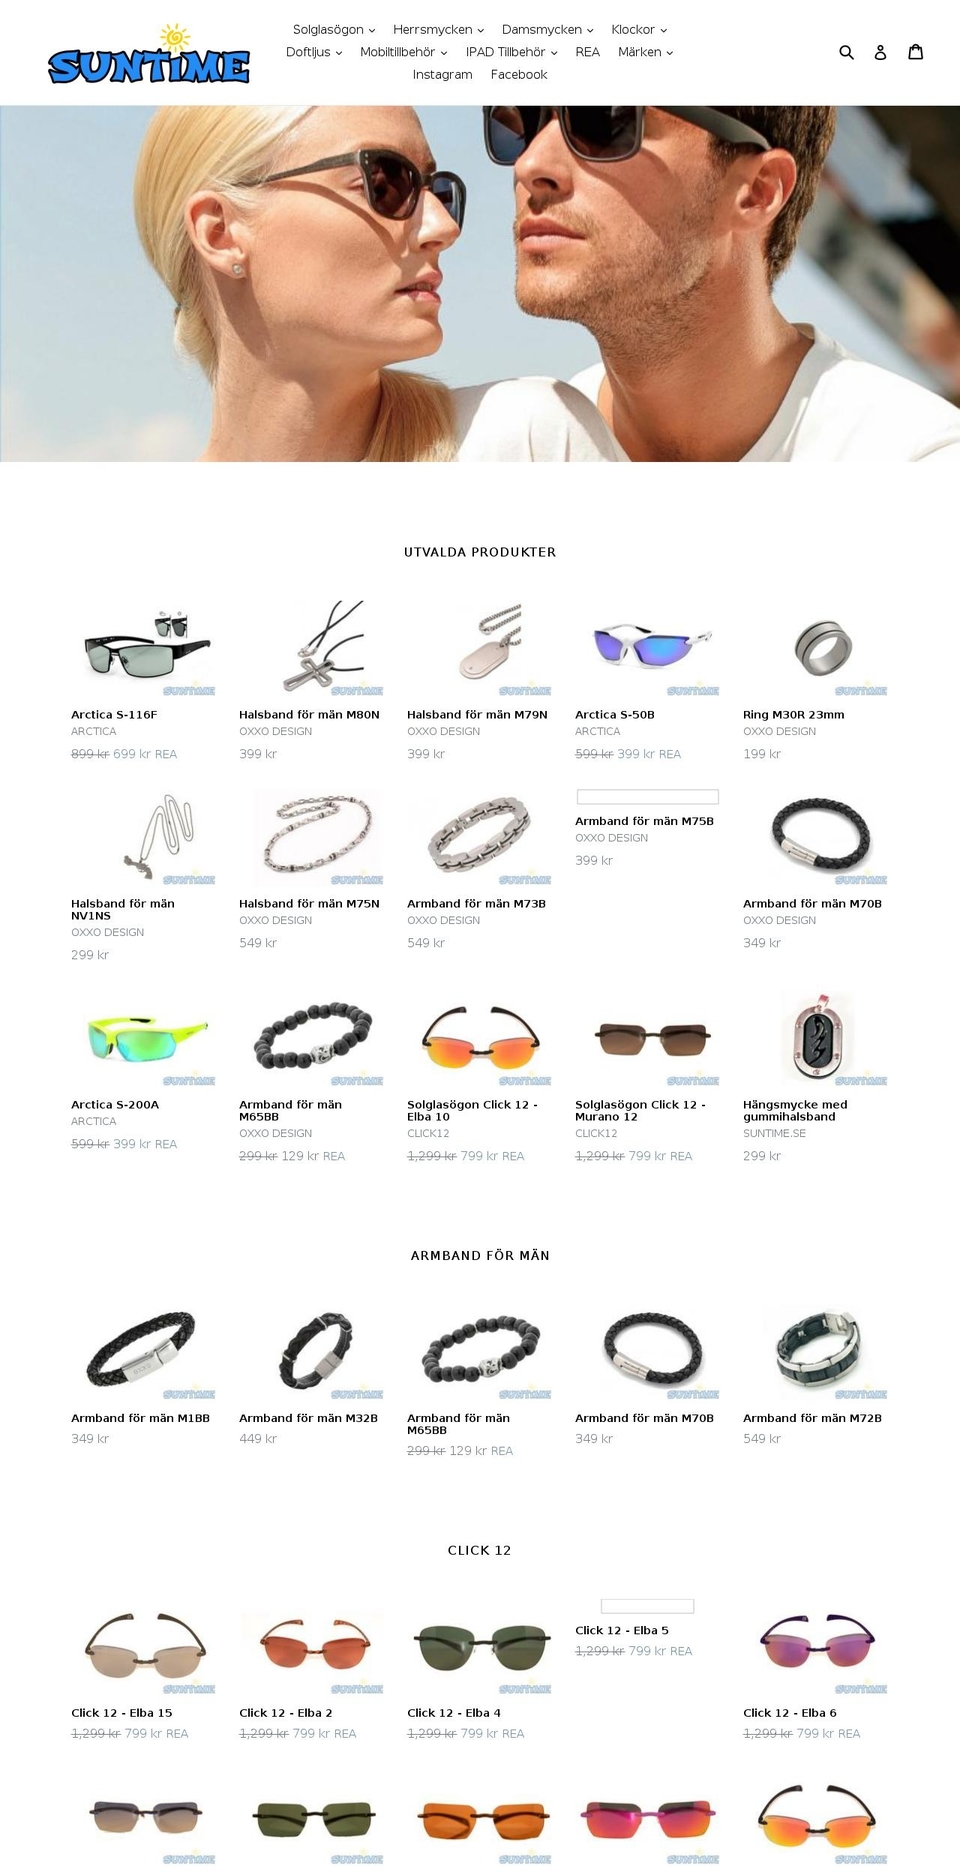 suntime.se shopify website screenshot